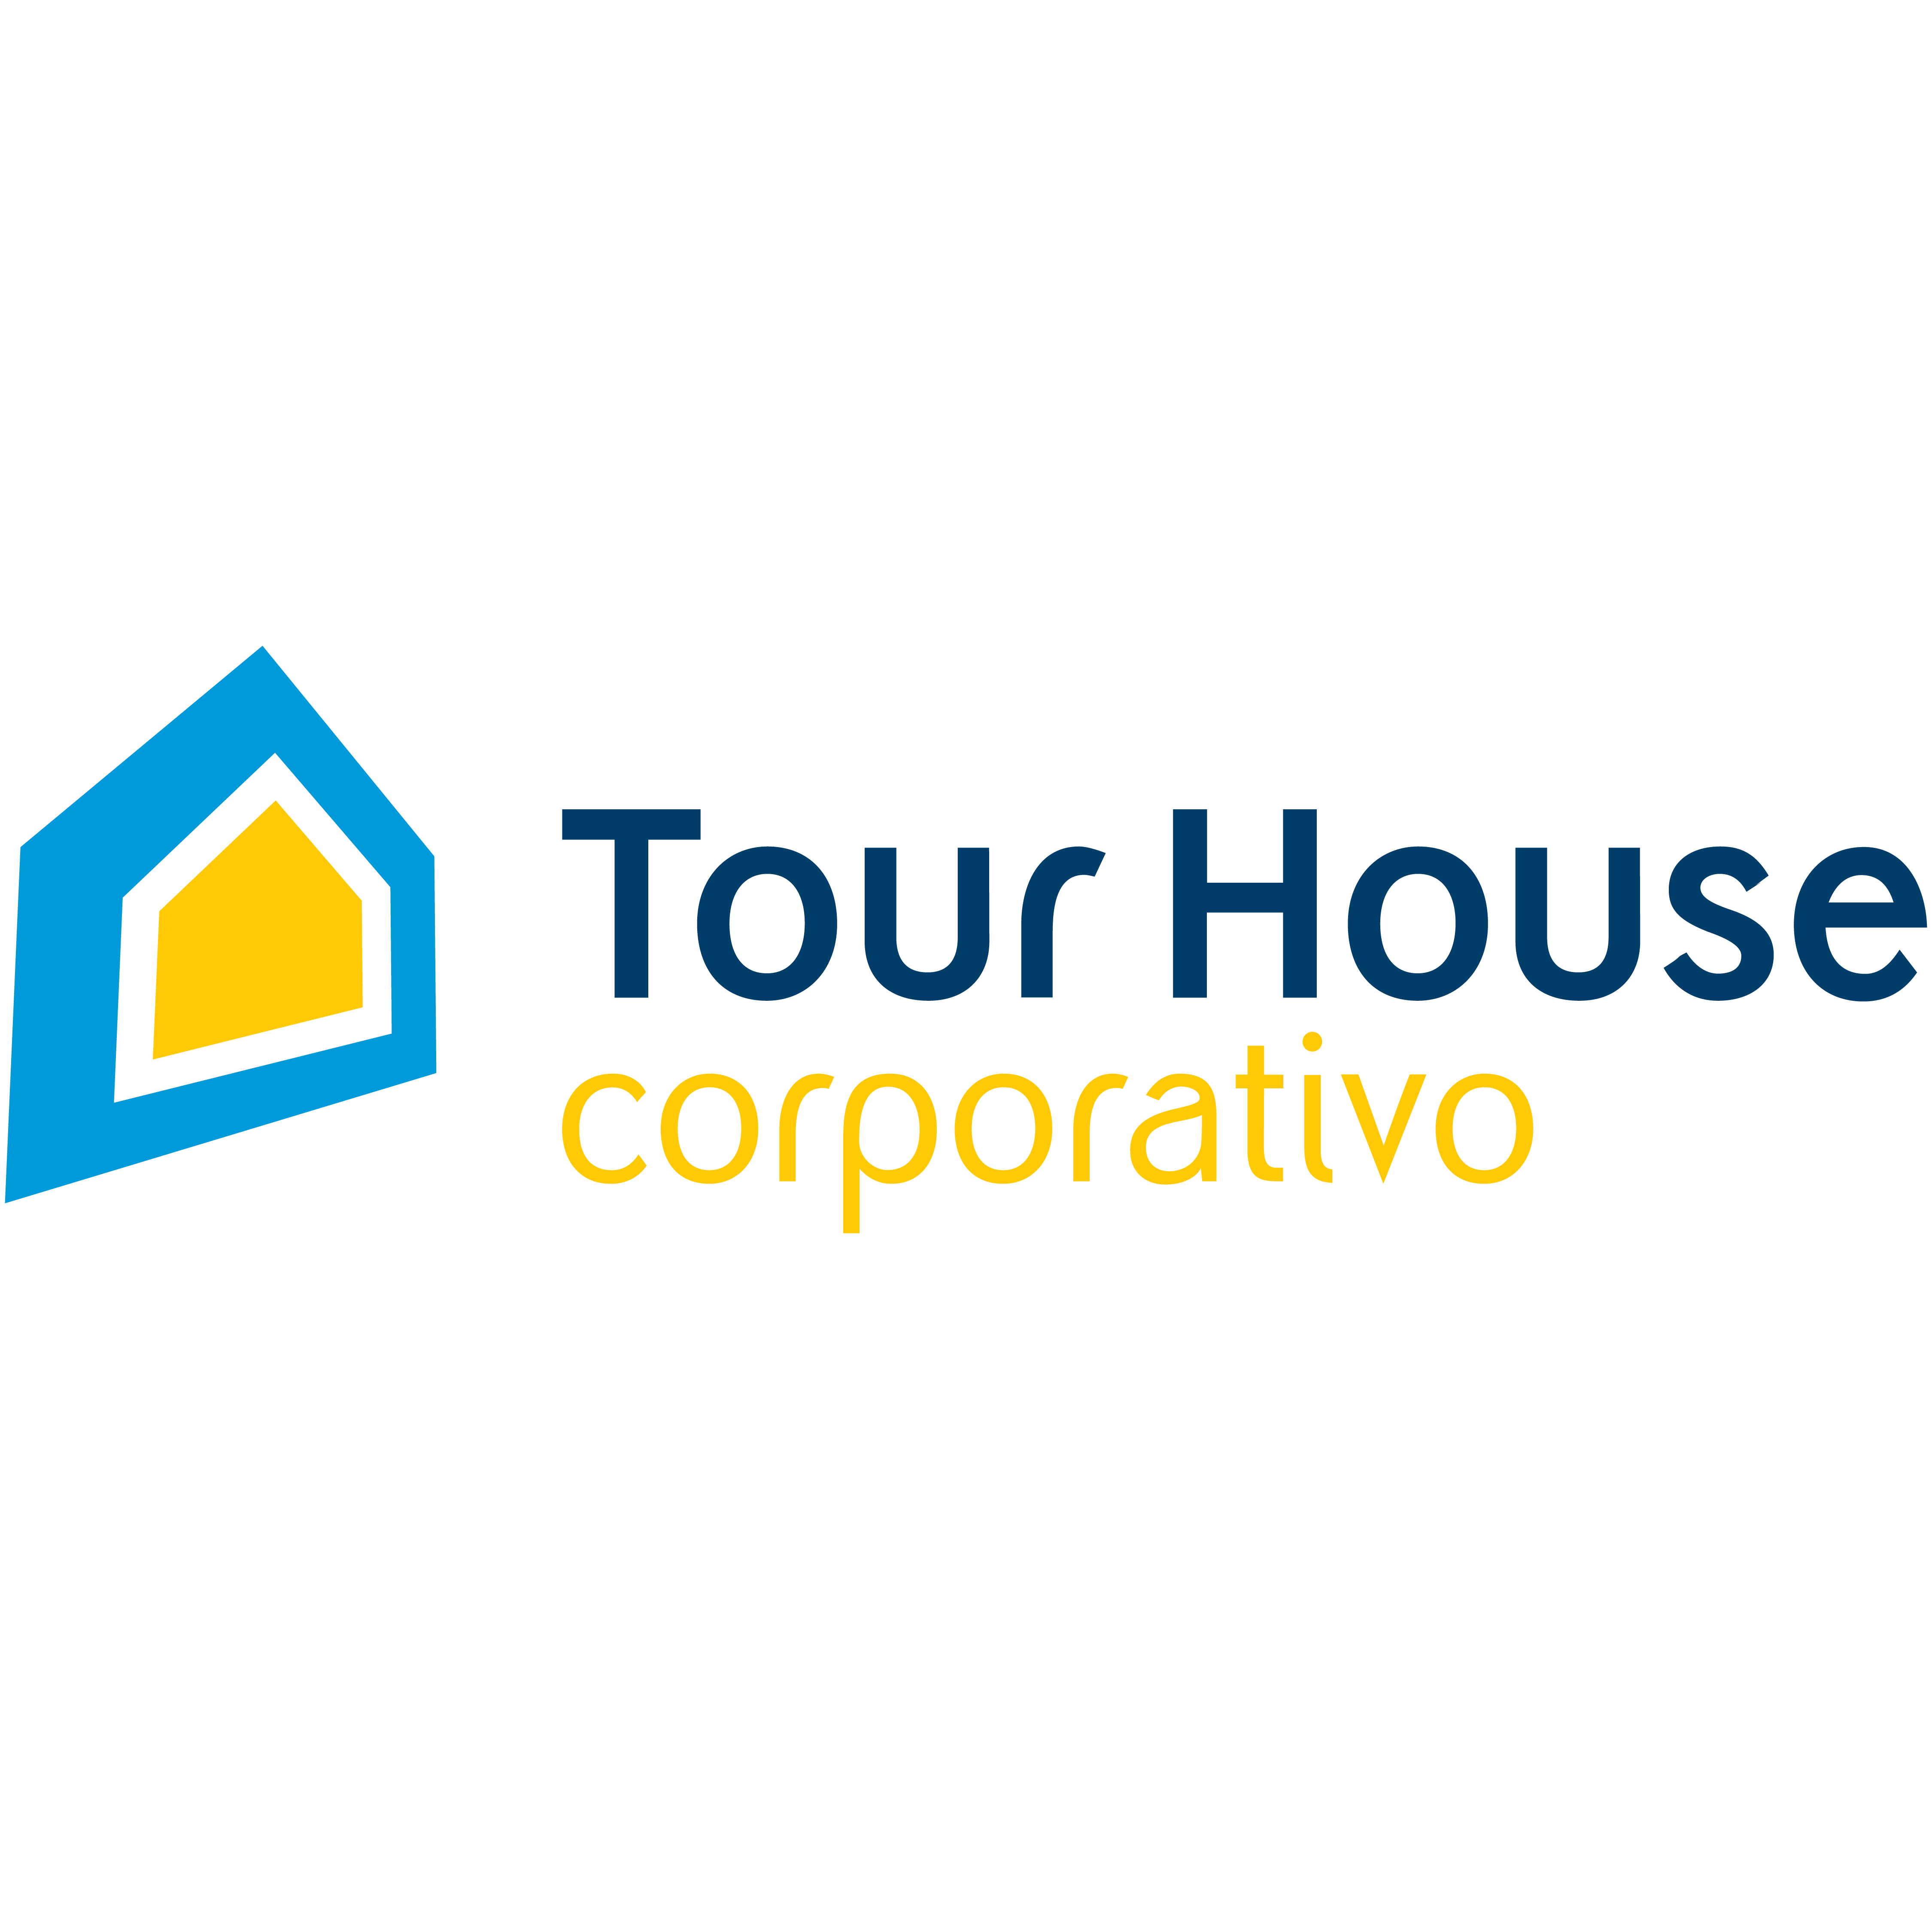 tourhouse-corporativo